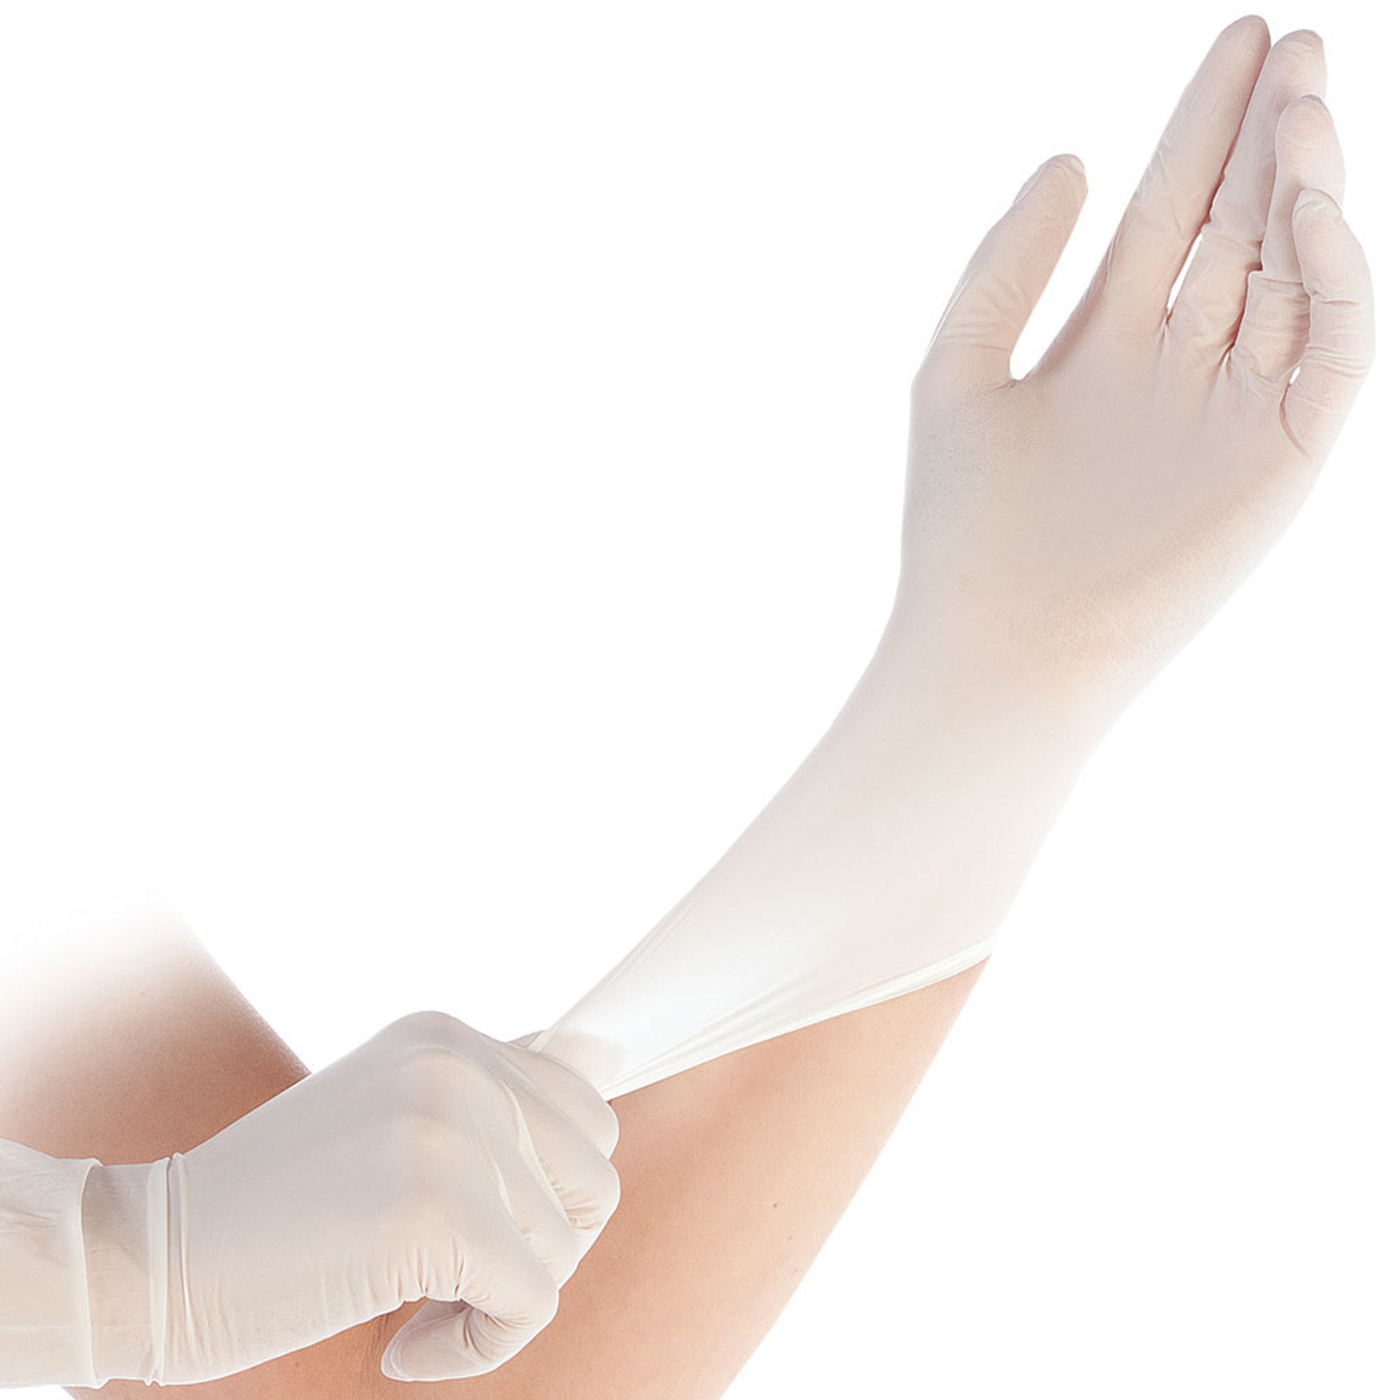 Hygostar Safe Light Nitrile Gloves, size L, white - 100 pieces